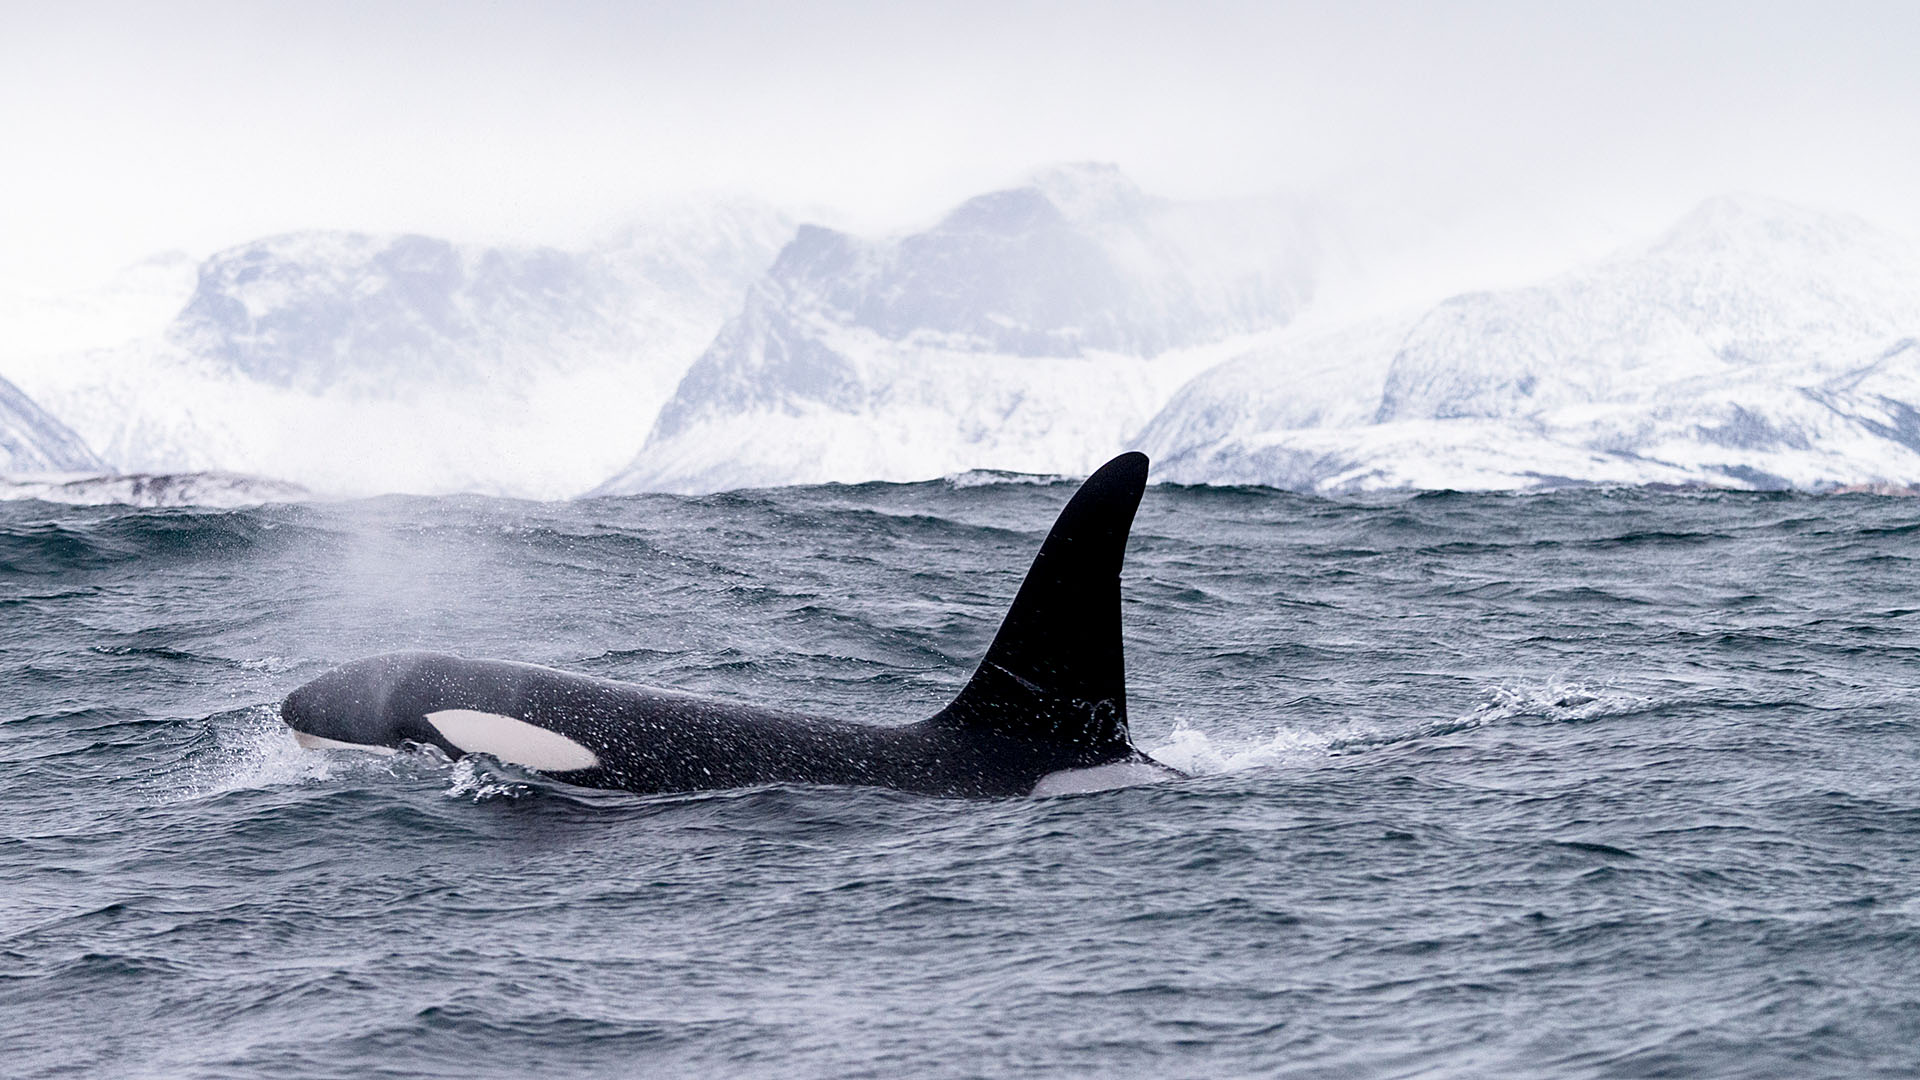 expeditie orka's bultruggen - orka mannetje op jacht